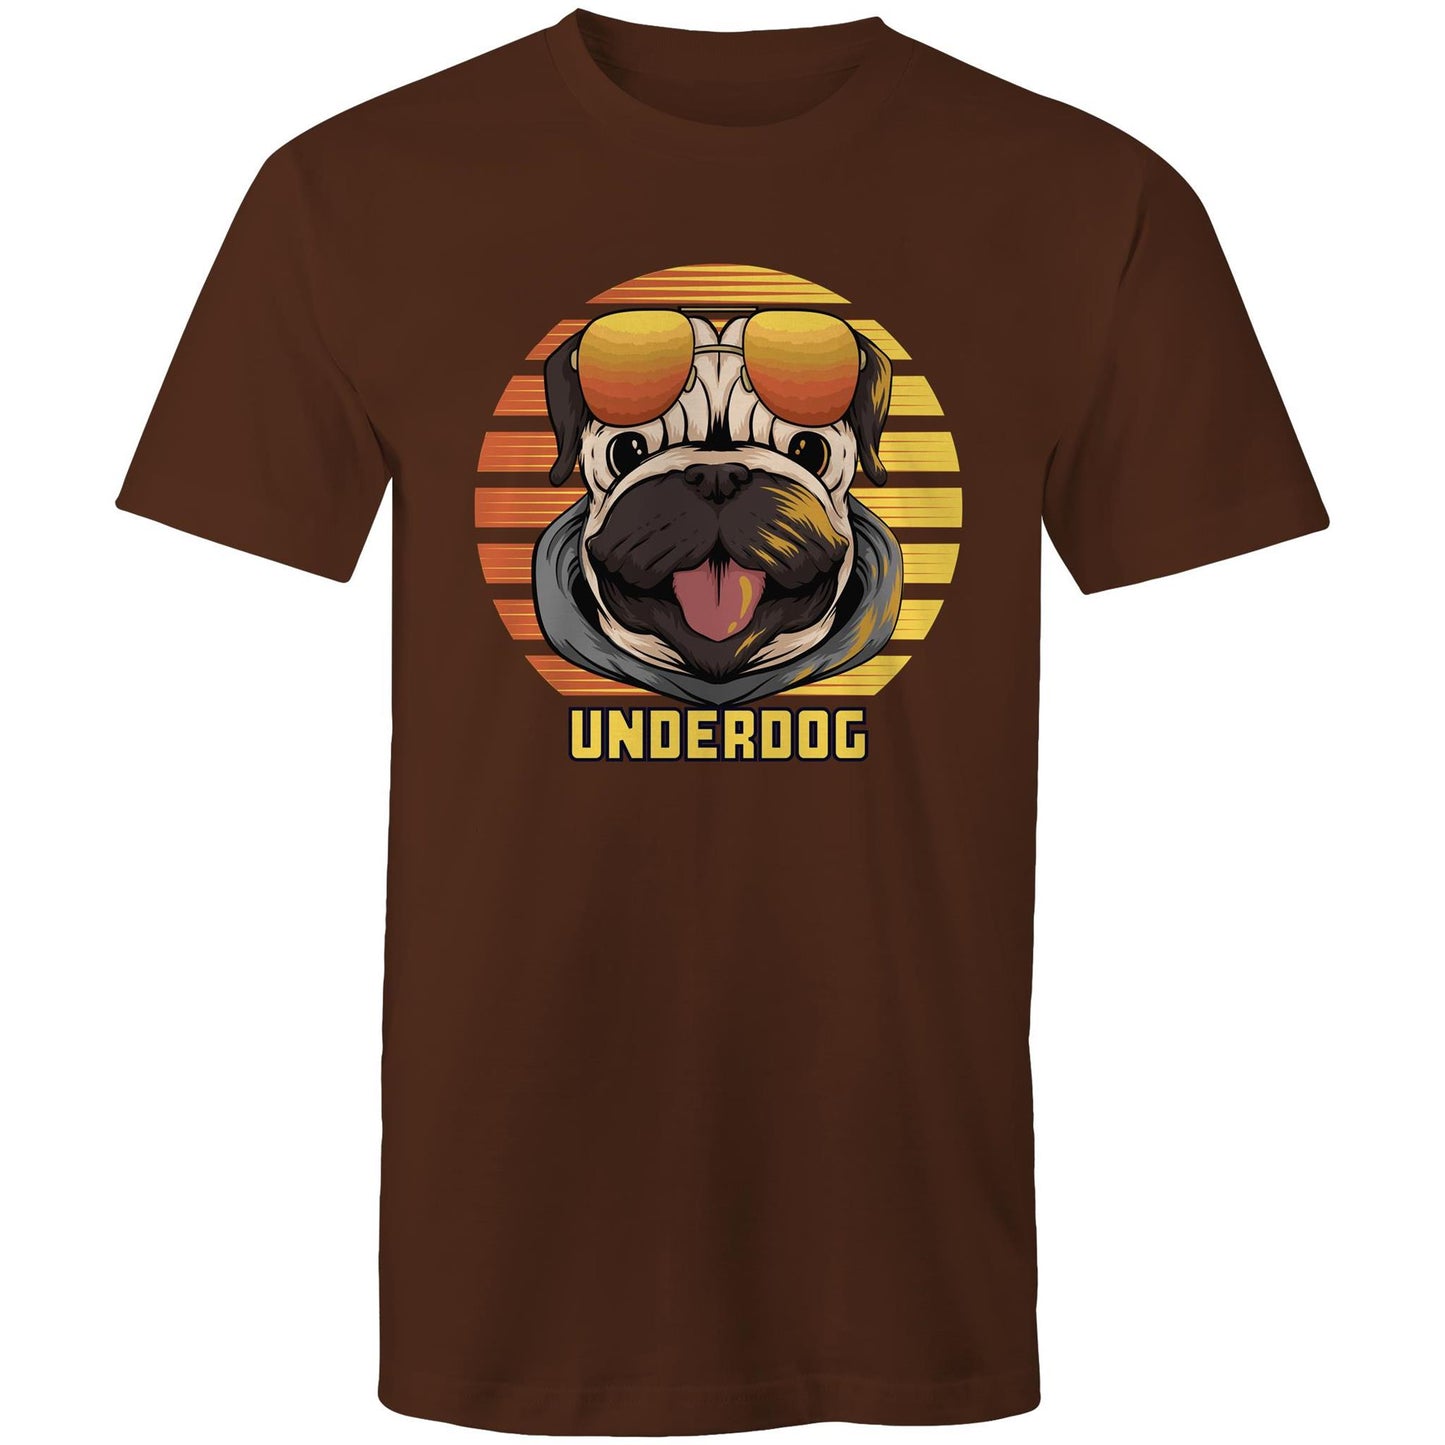 Underdog - Mens T-Shirt Dark Chocolate Mens T-shirt animal